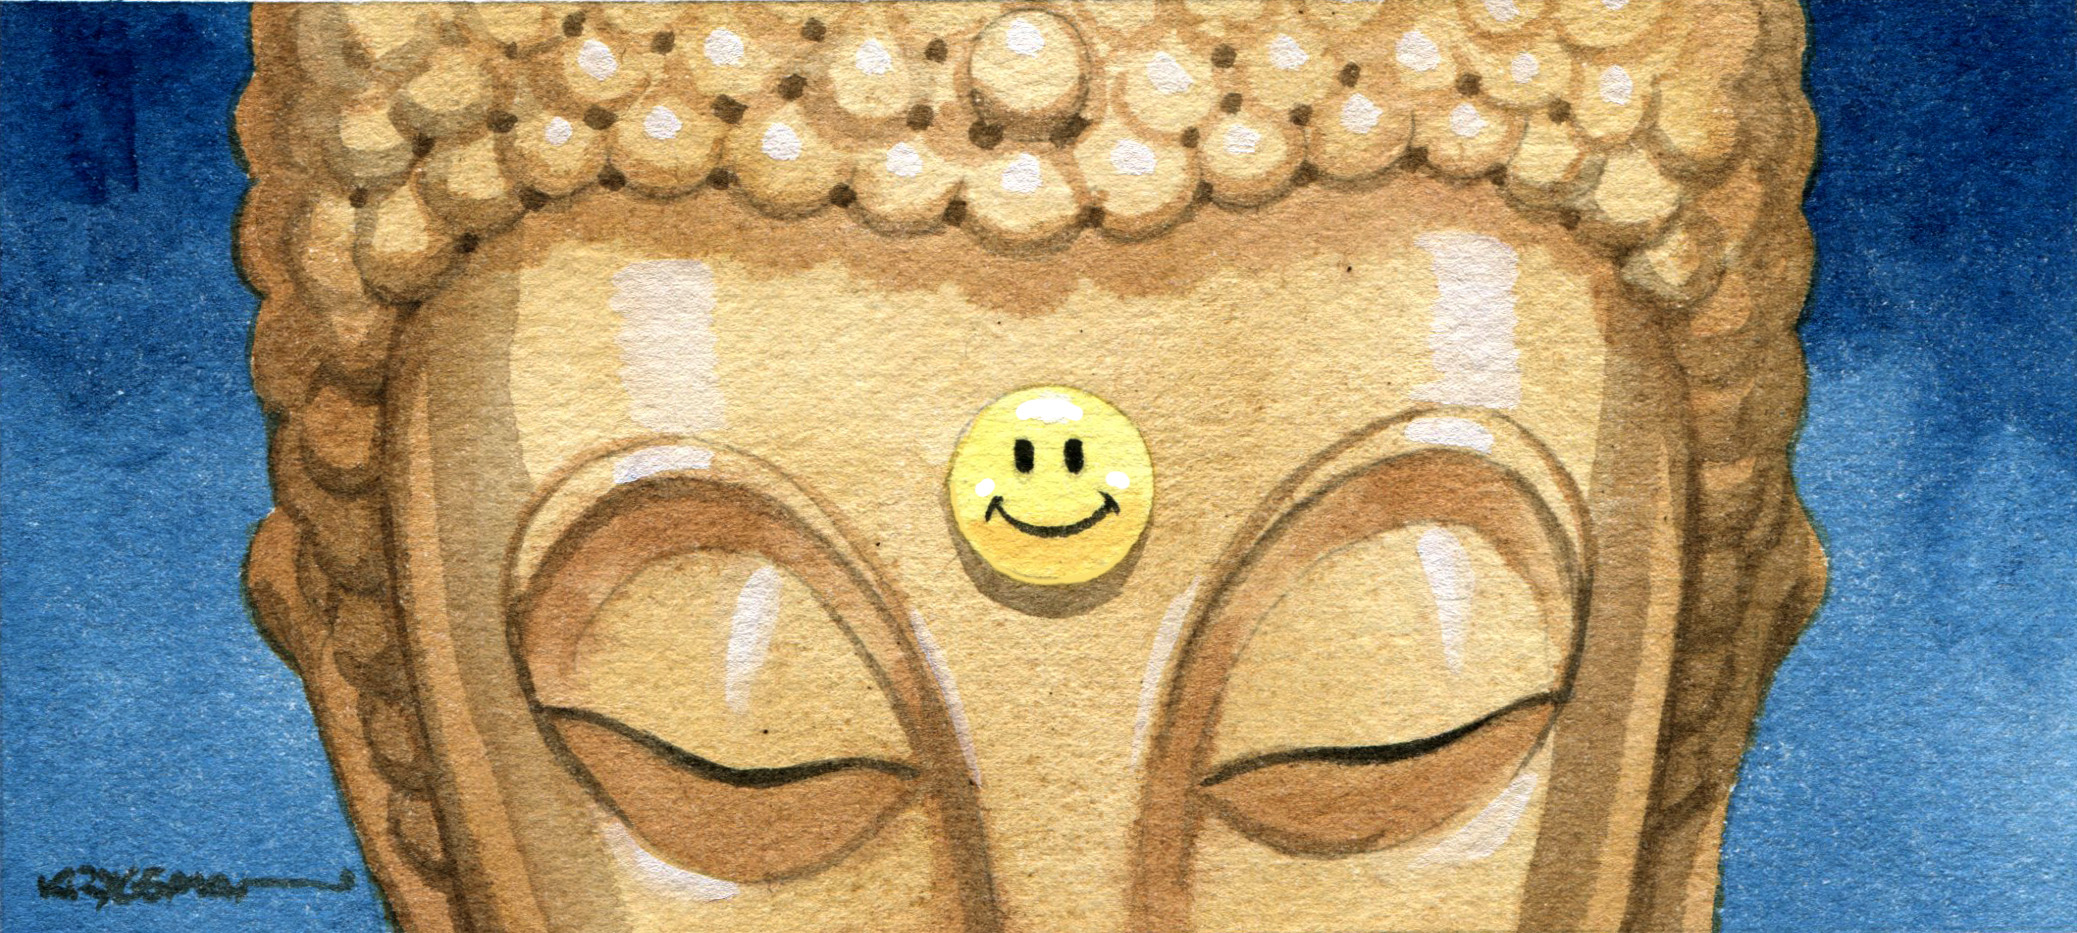 OZ WAP- Ostrow col. 22/11/2014 Buddha with smiley on forehead. Artwork by Sturt Krygsman.